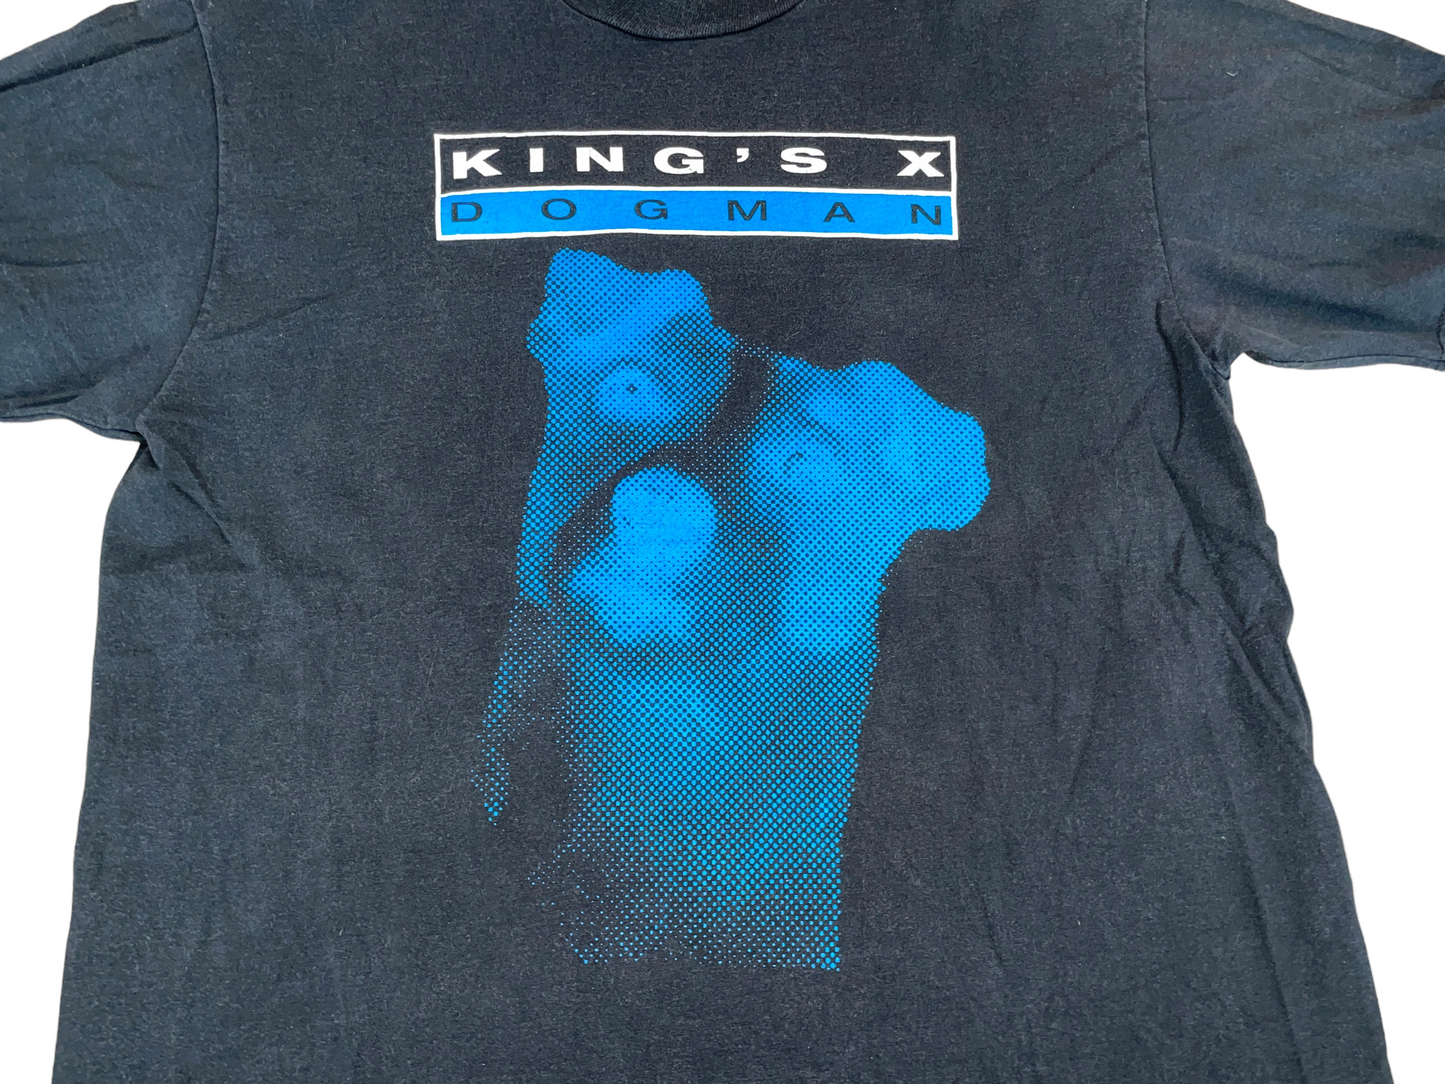 Vintage 1993 King's X Dogman Tour T-Shirt